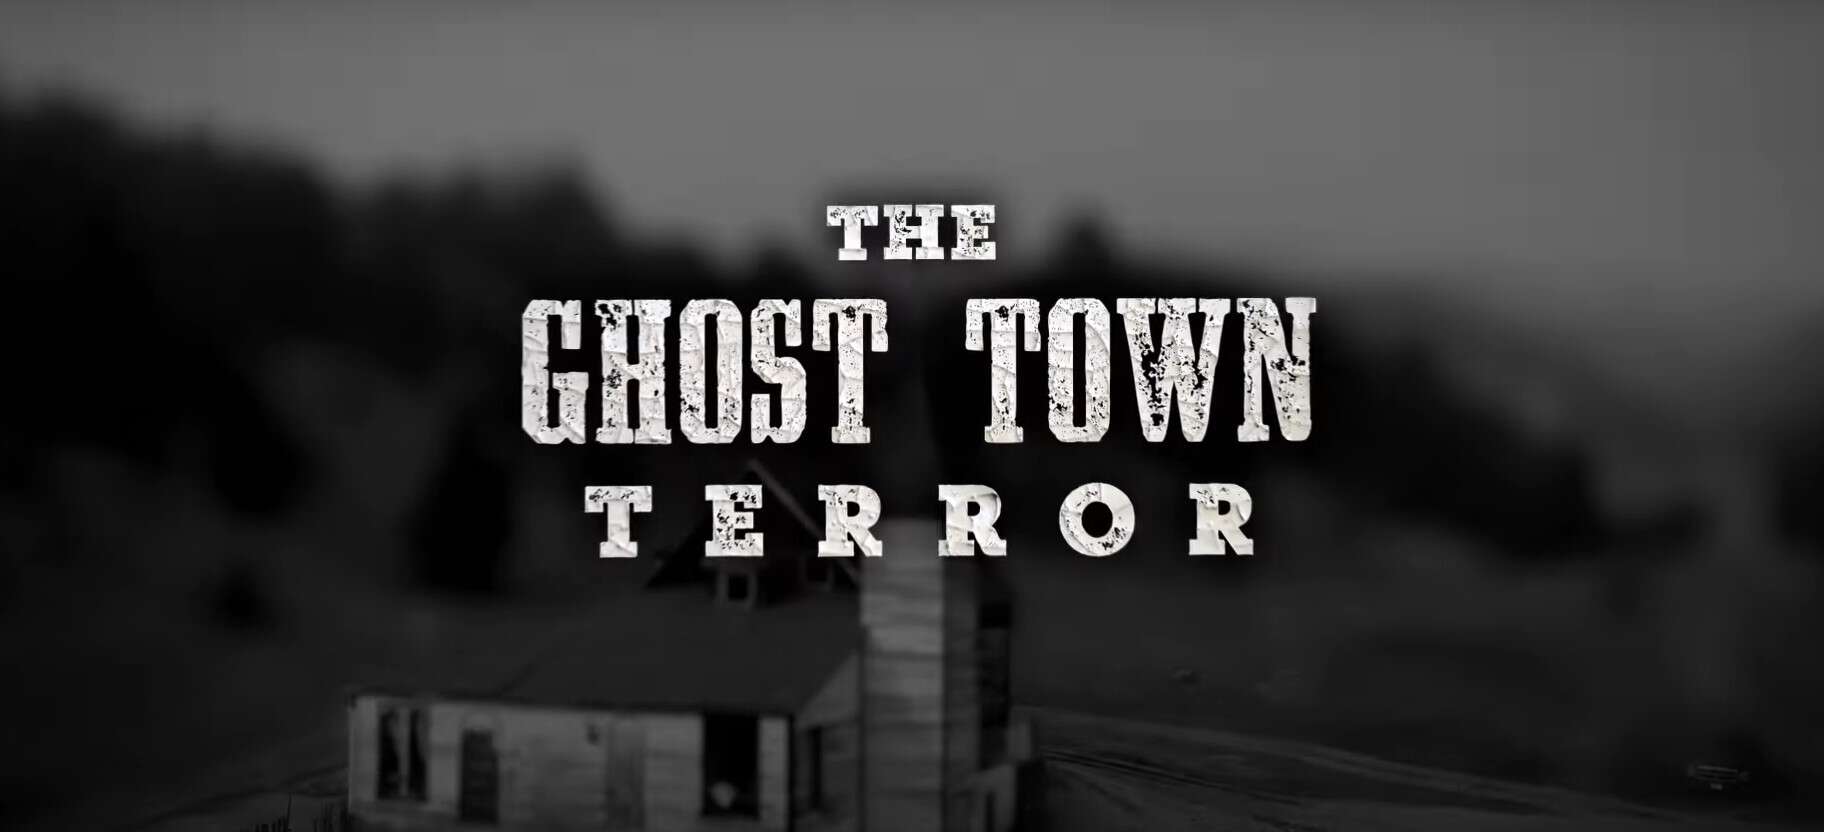 The Ghost Town Terror Season 2